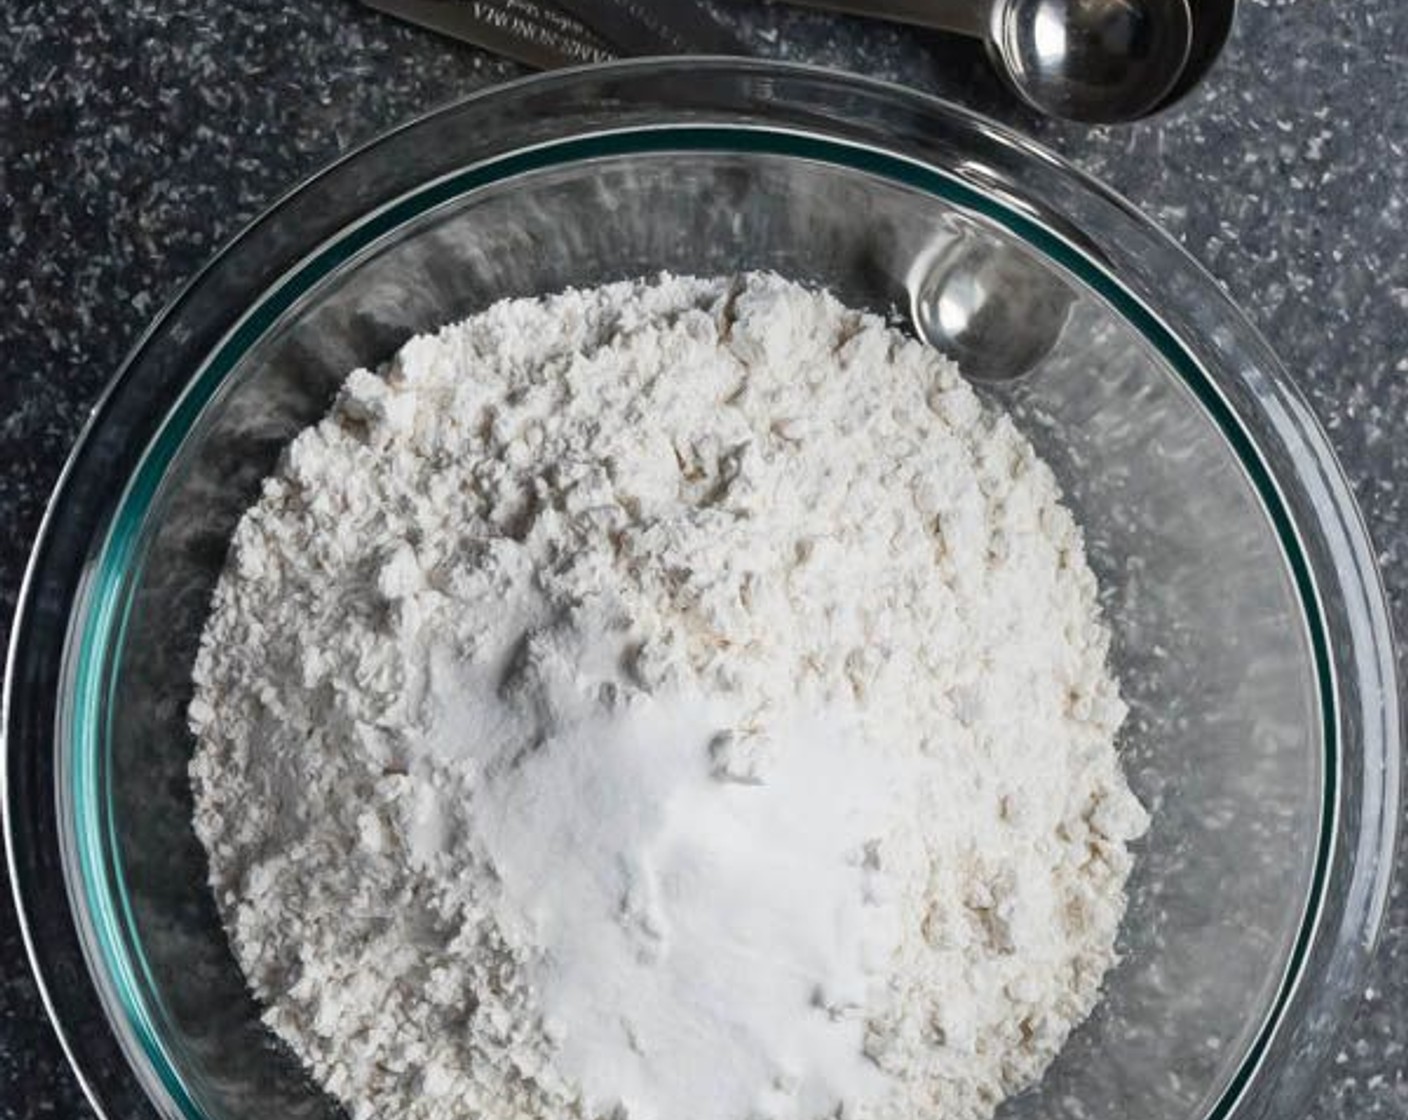 step 4 In a medium bowl, mix All-Purpose Flour (3 cups), Baking Soda (1/2 Tbsp), and Salt (1/2 tsp). Set aside.